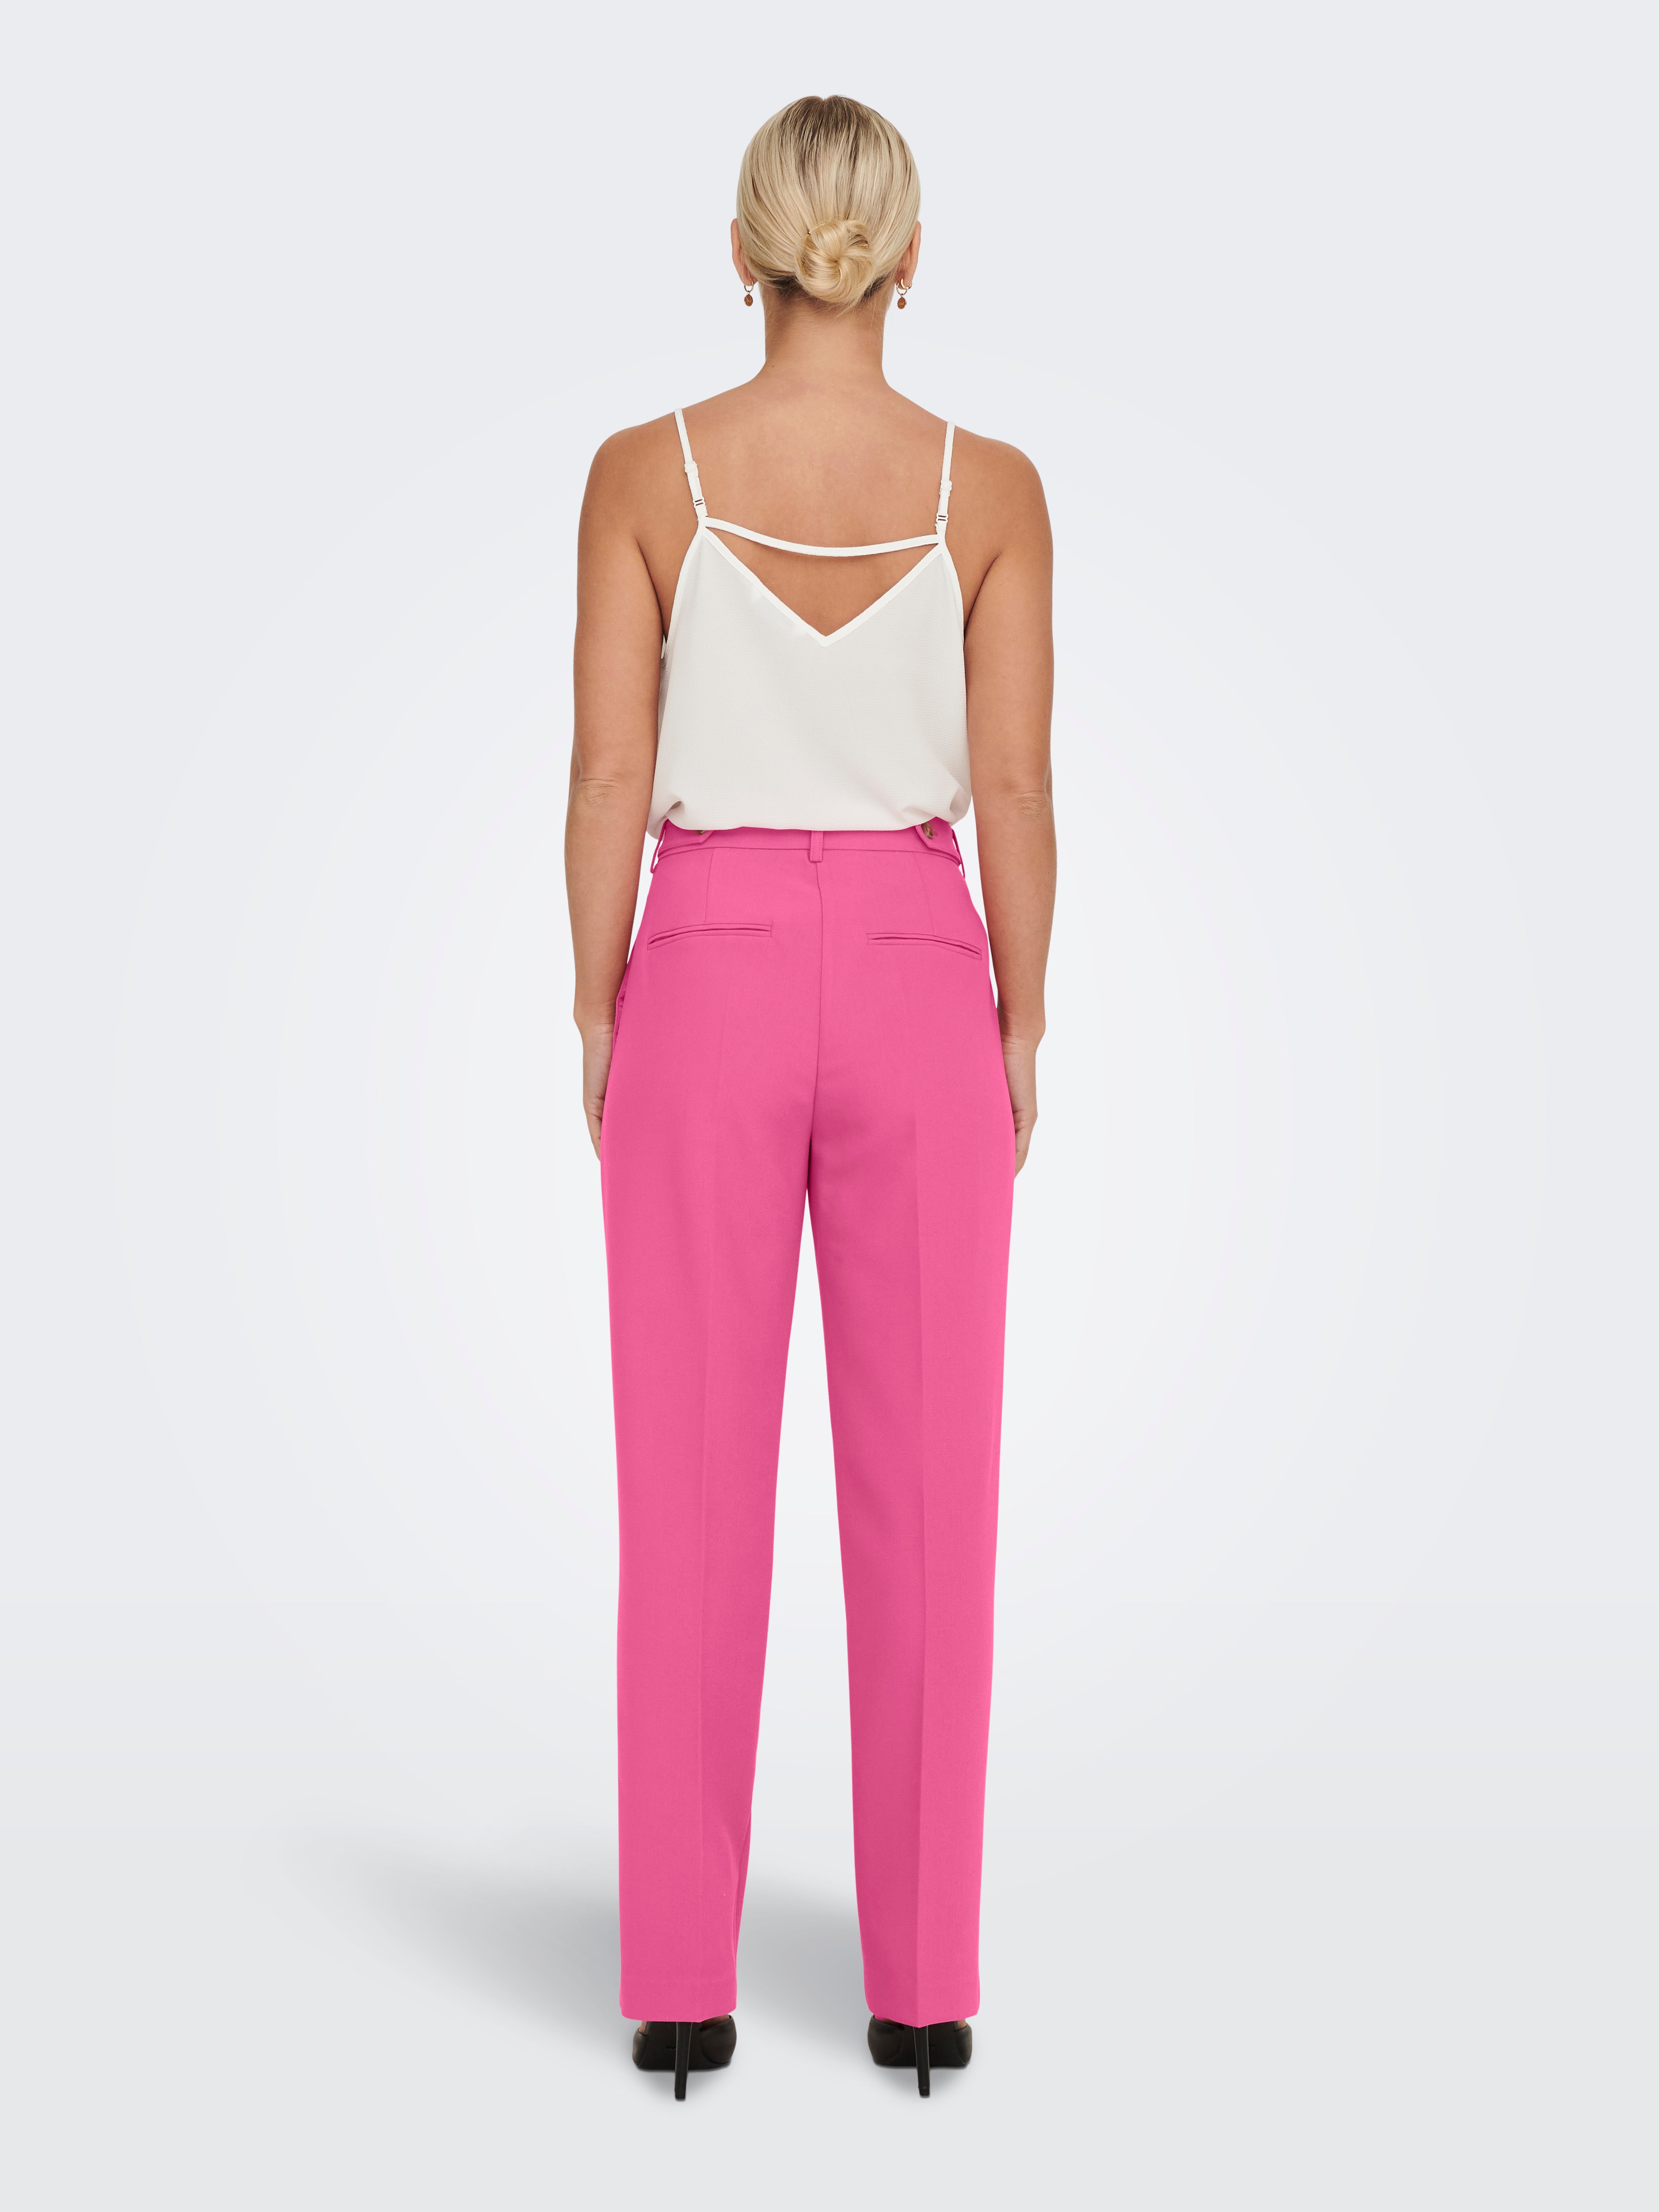 Buy Purple Solid Slim Pants Online - Shop for W